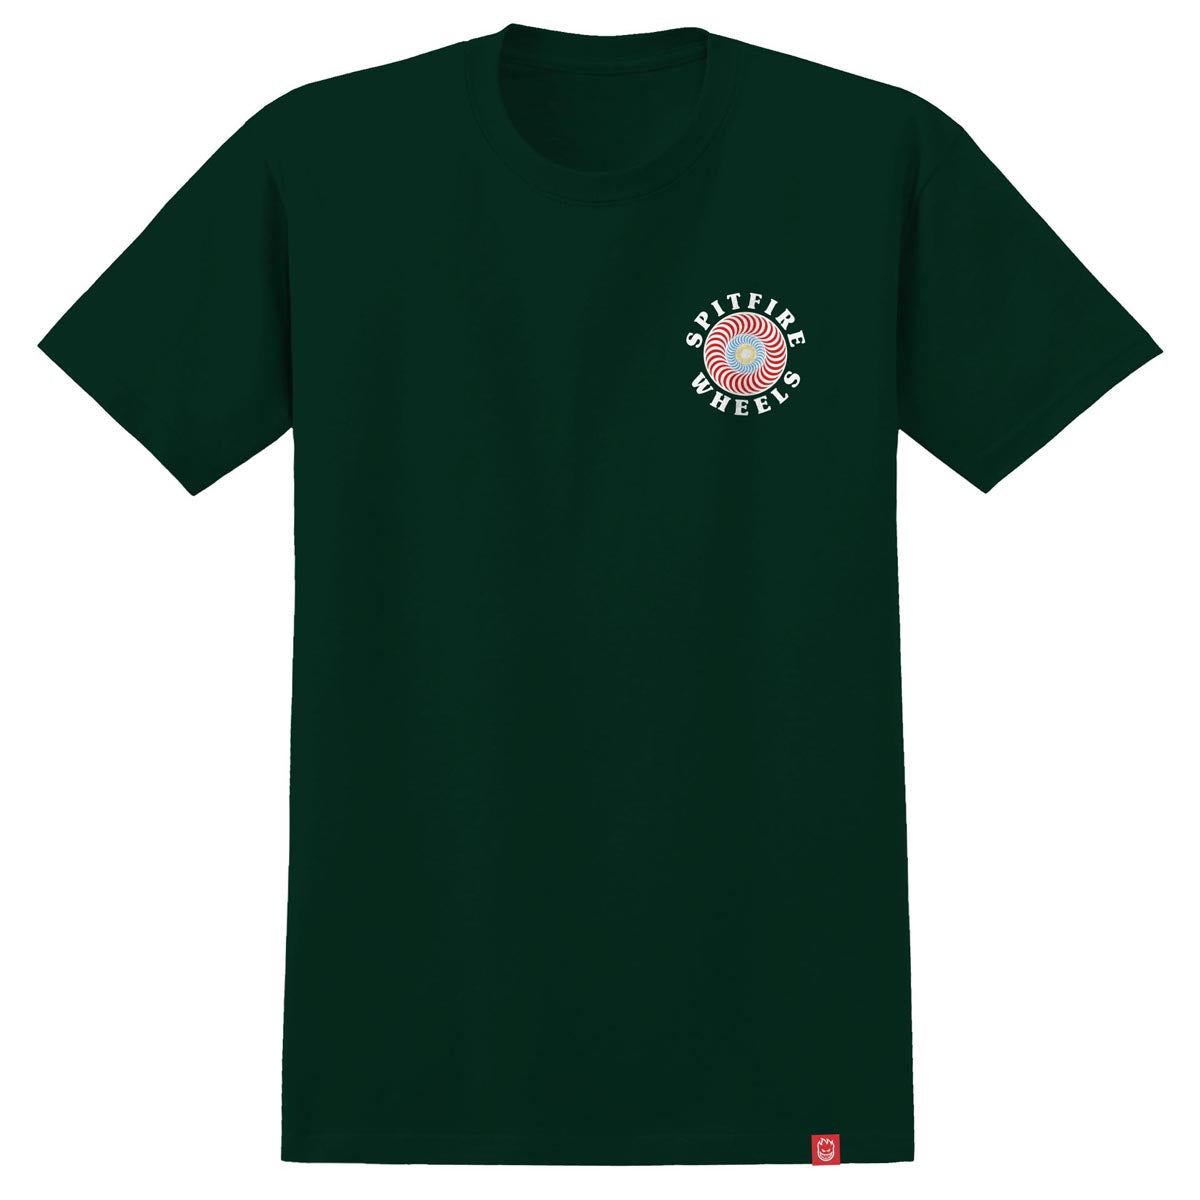 Spitfire Og Classic Fill T-Shirt - Forest Green/Multi Color image 2